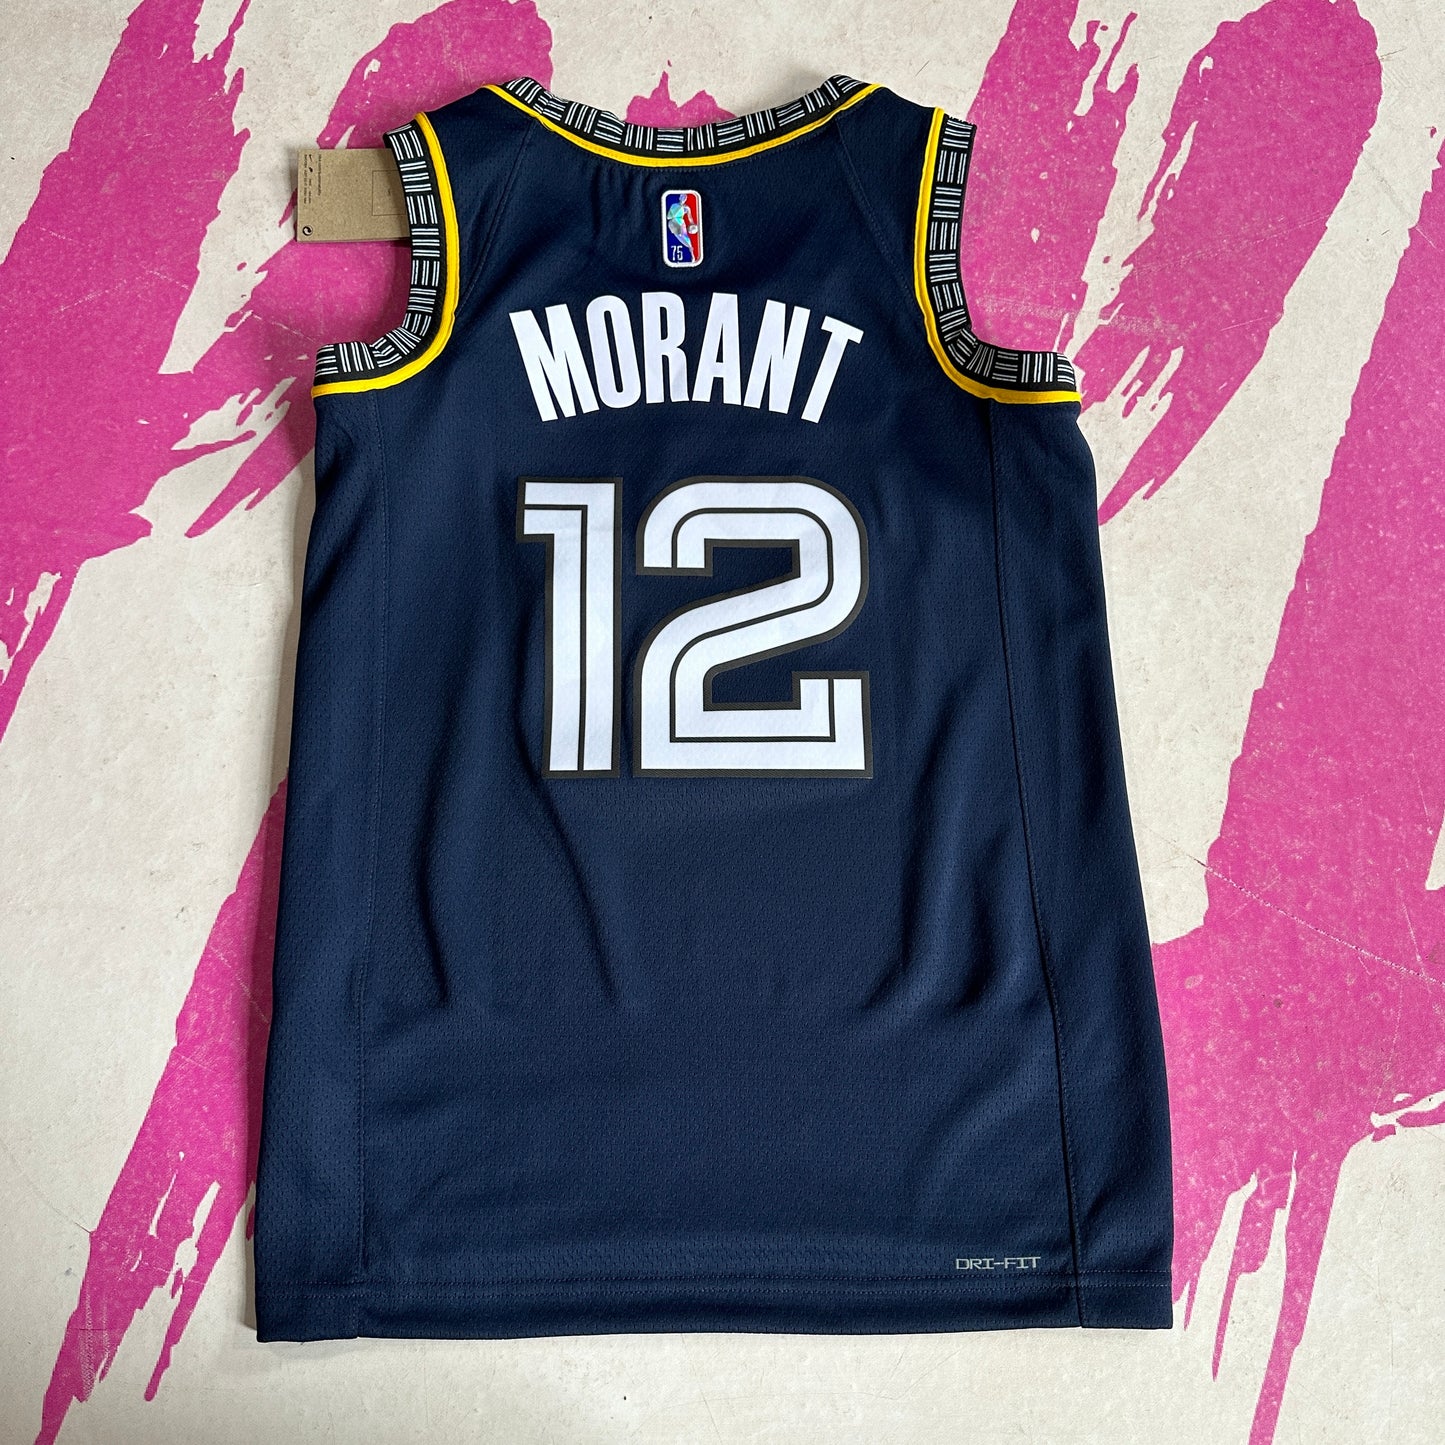 Ja Morant Memphis Grizzlies Mixtape City Edition Nike Jersey